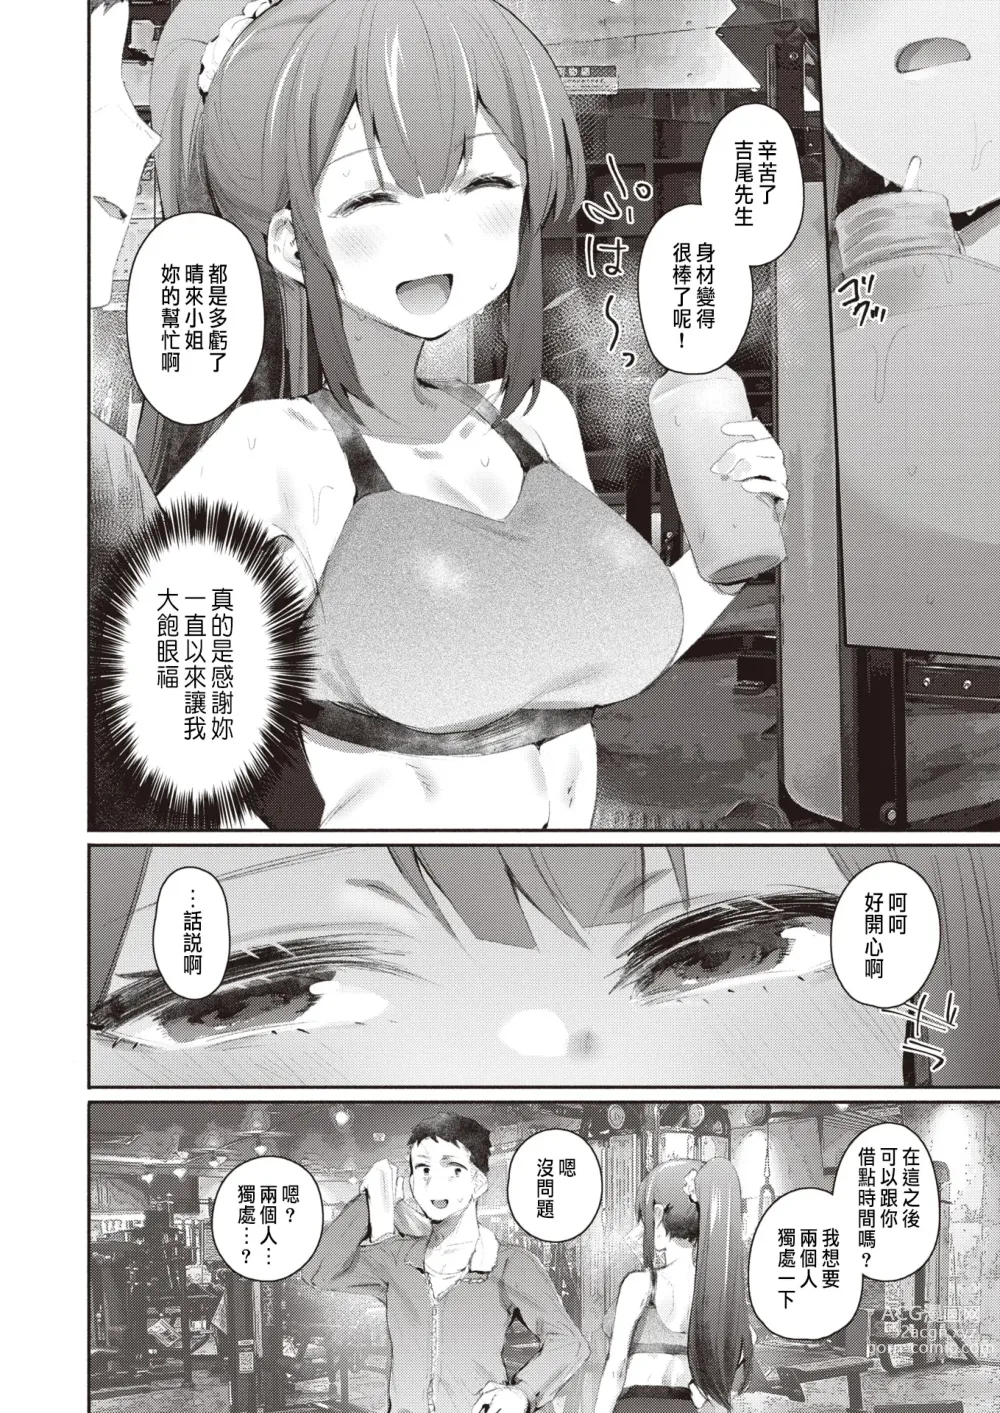 Page 6 of manga build up!